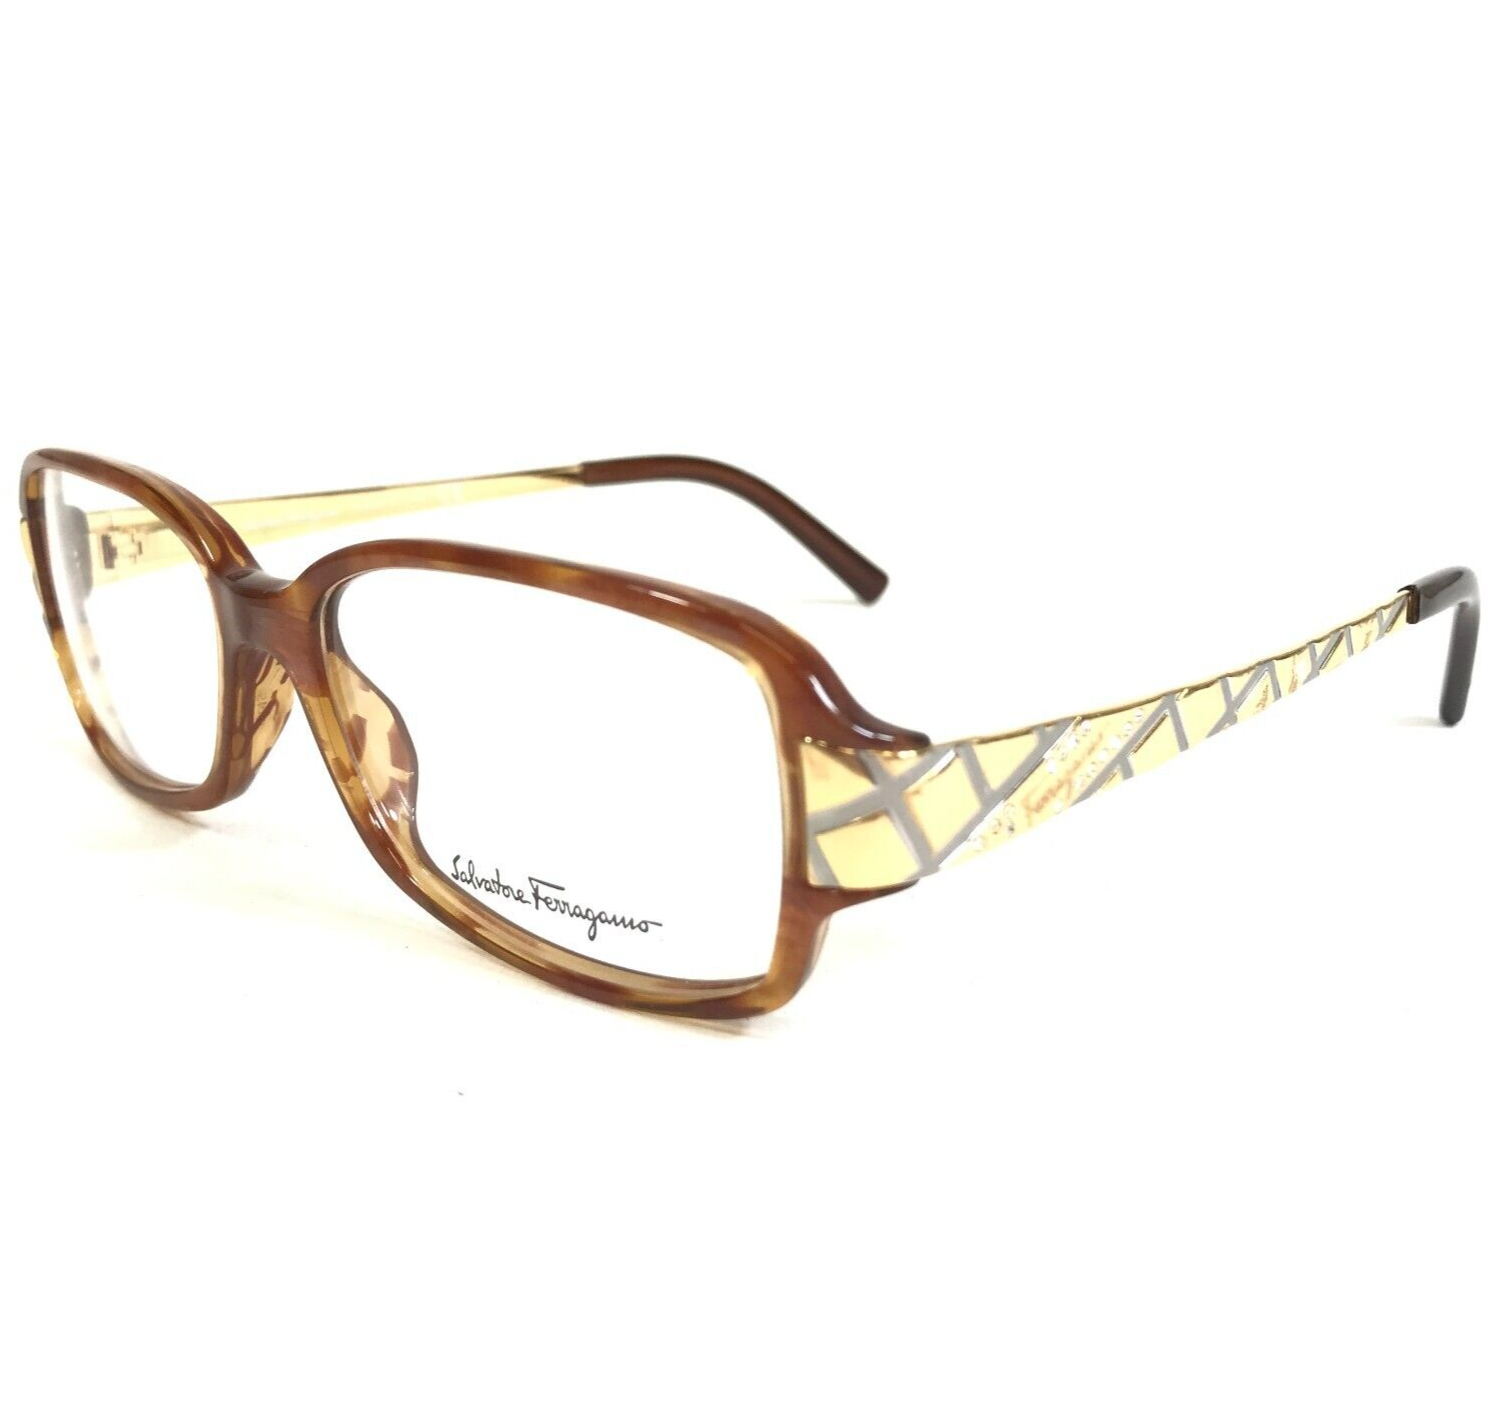 Primary image for Salvatore Ferragamo Eyeglasses Frames 2664-B 641 Brown Gold Silver 51-15-130